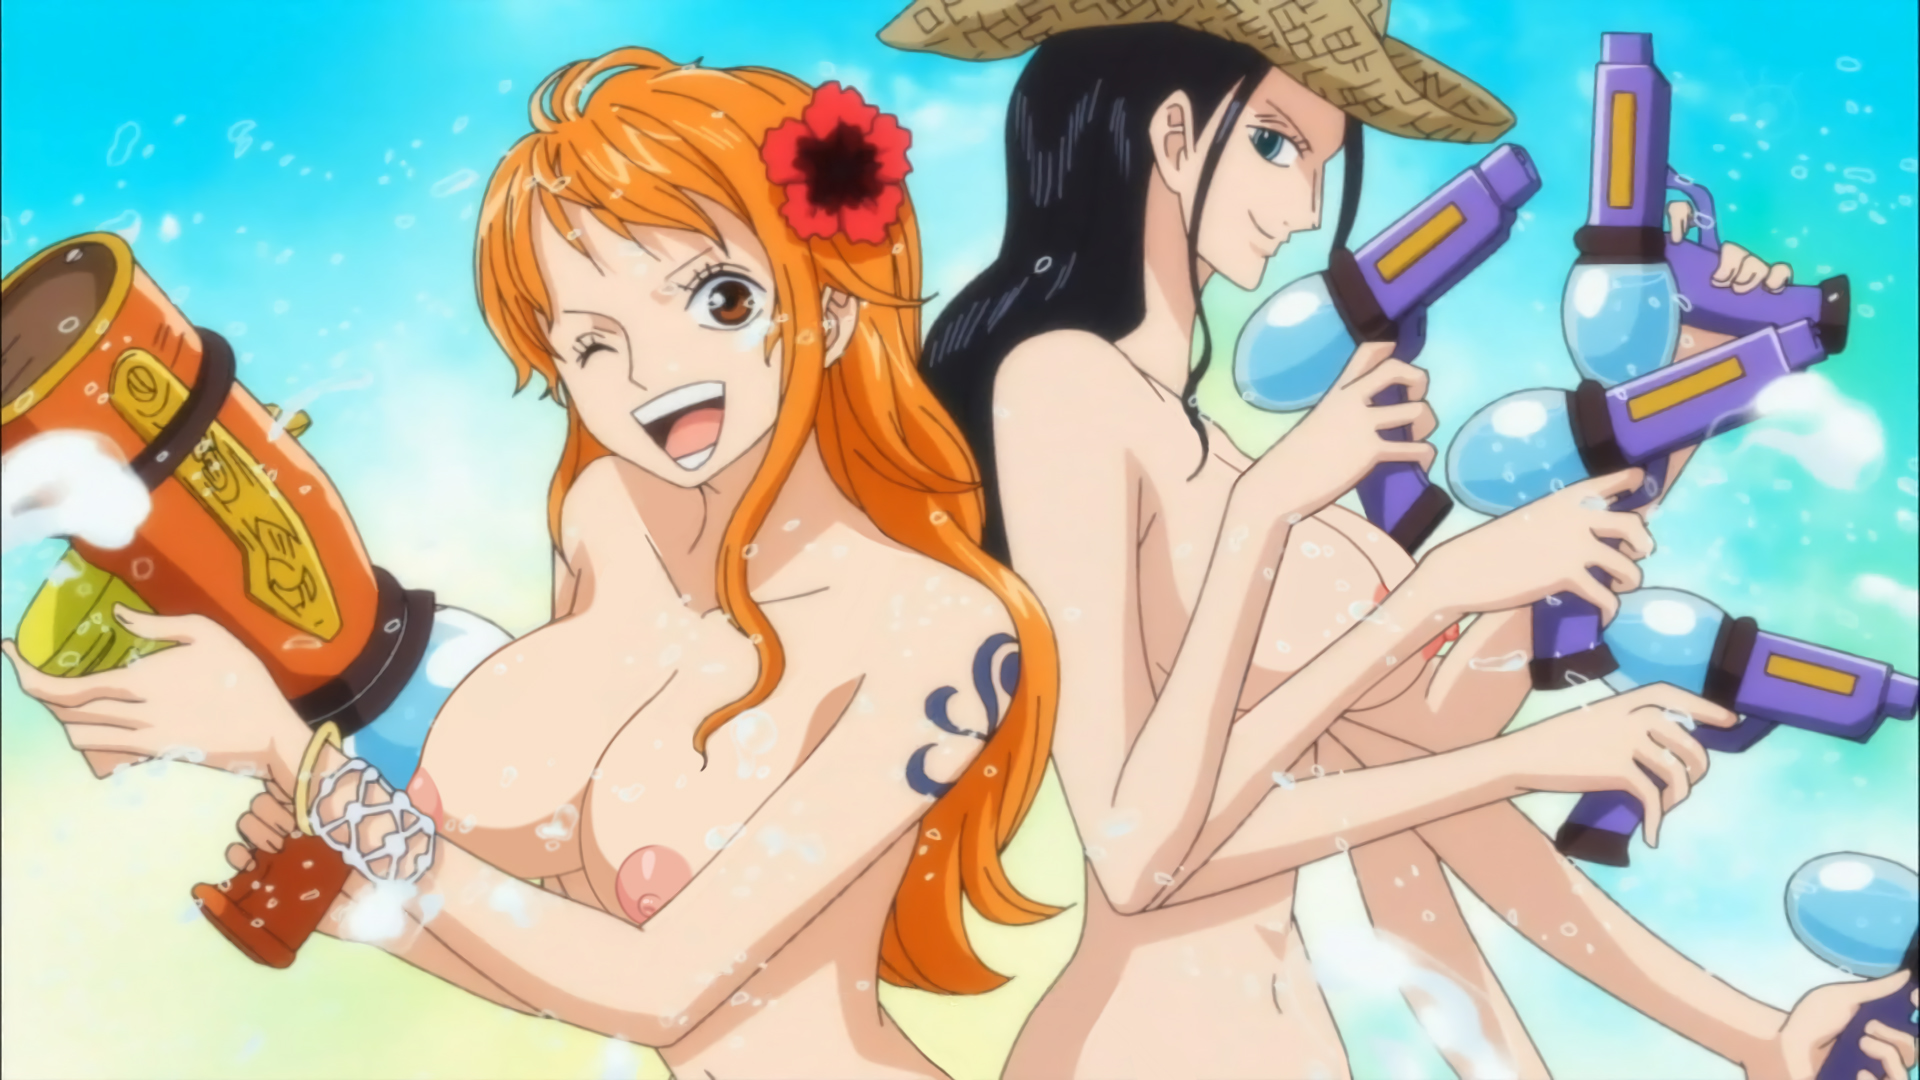 Nami One Piece Nico Robin One Piece Highres Nude Filter Third